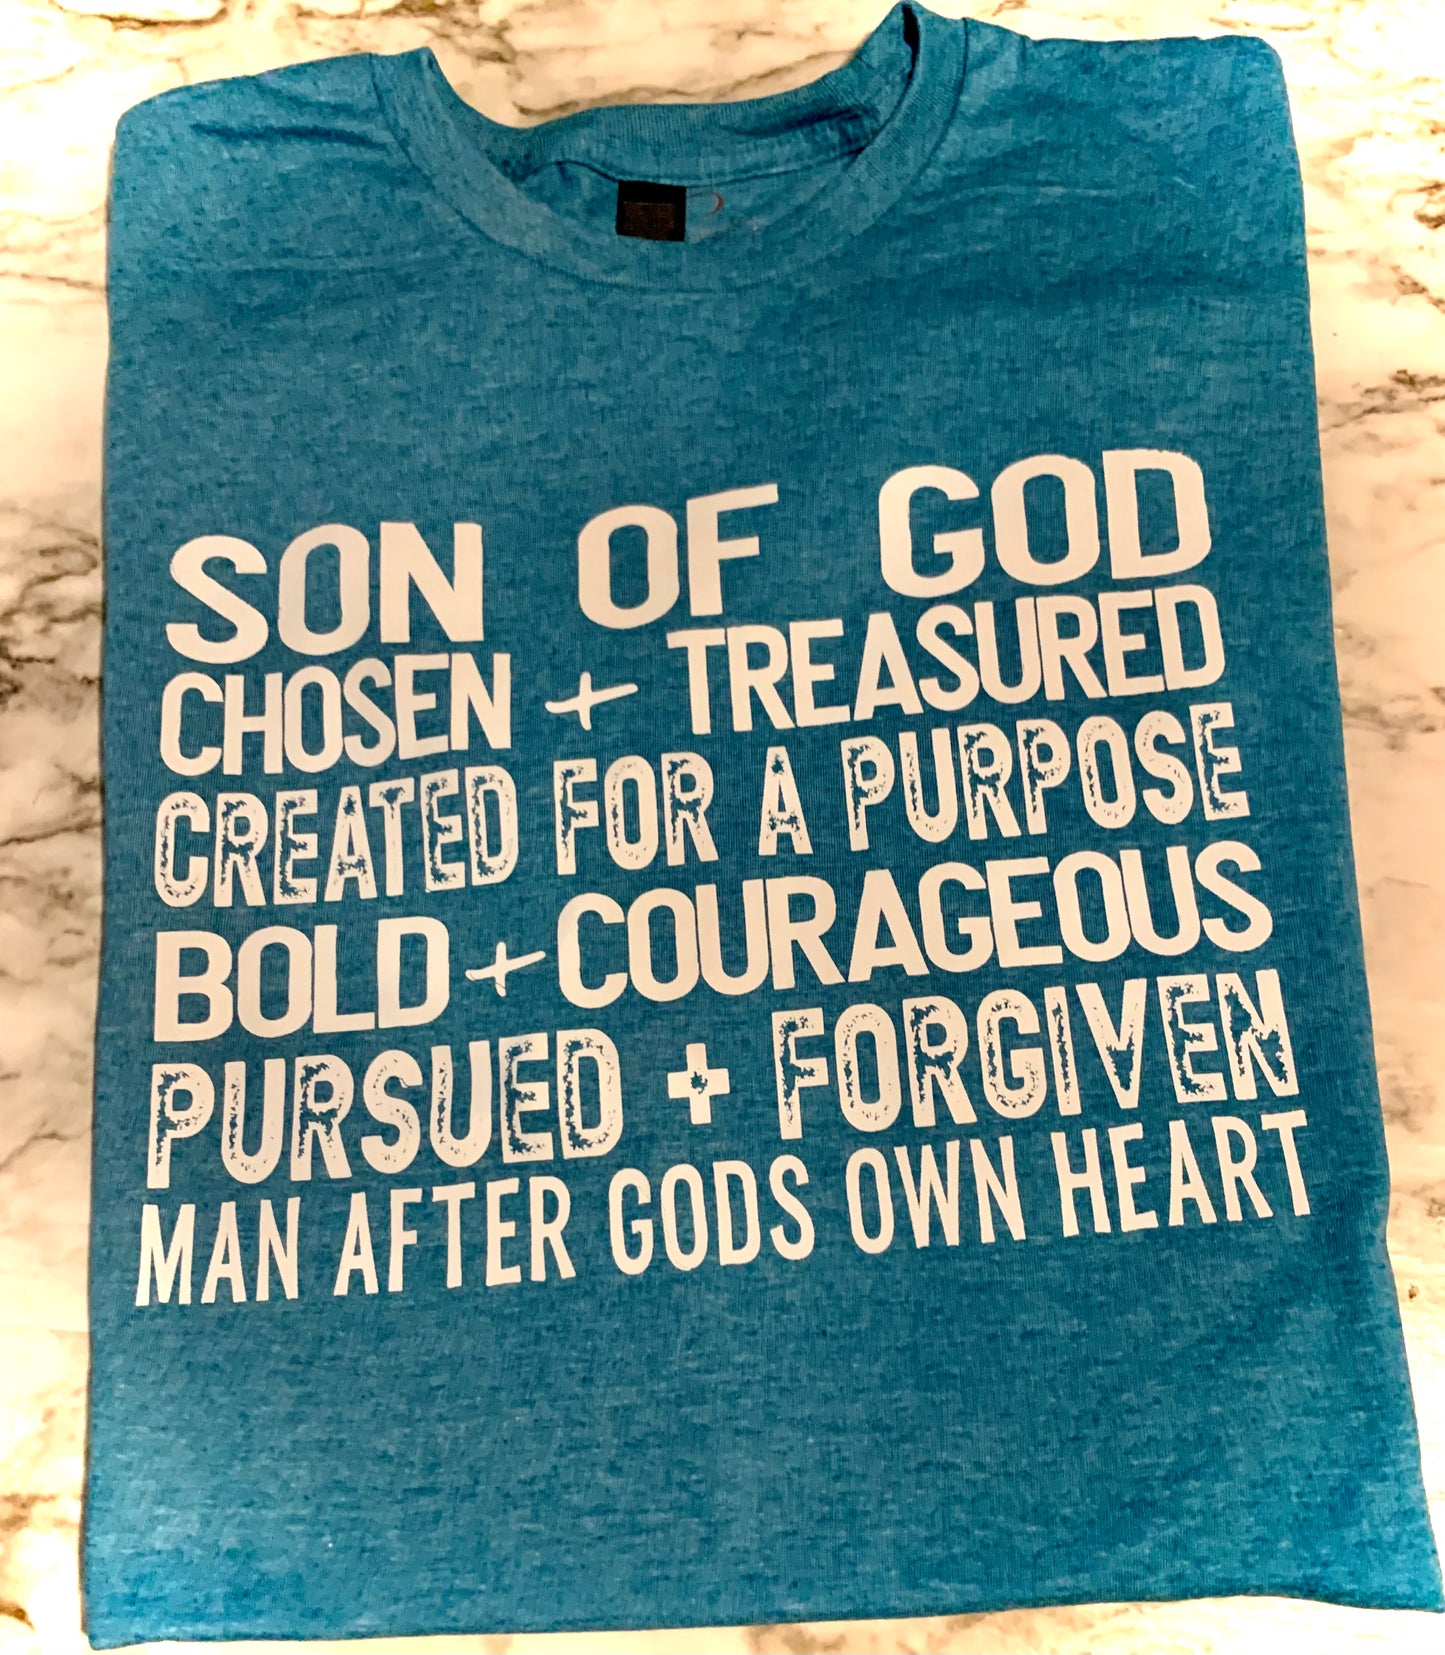 Son of GOD T-shirt